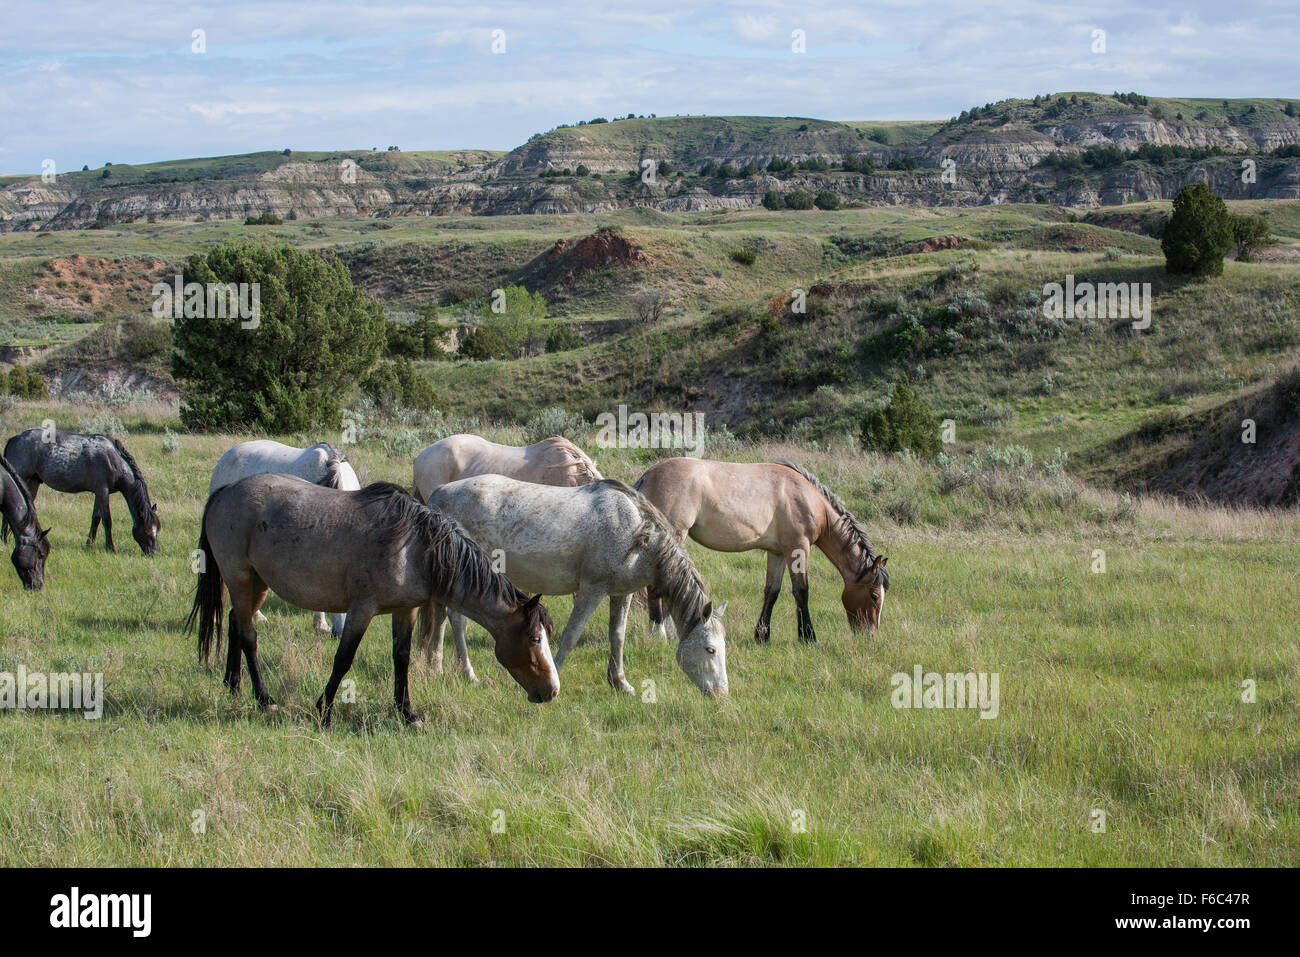 Wild Horses grazing (Equs ferus), Mustangs, Feral, Theodore Roosevelt National Park, North Dakota, Western North America Stock Photo